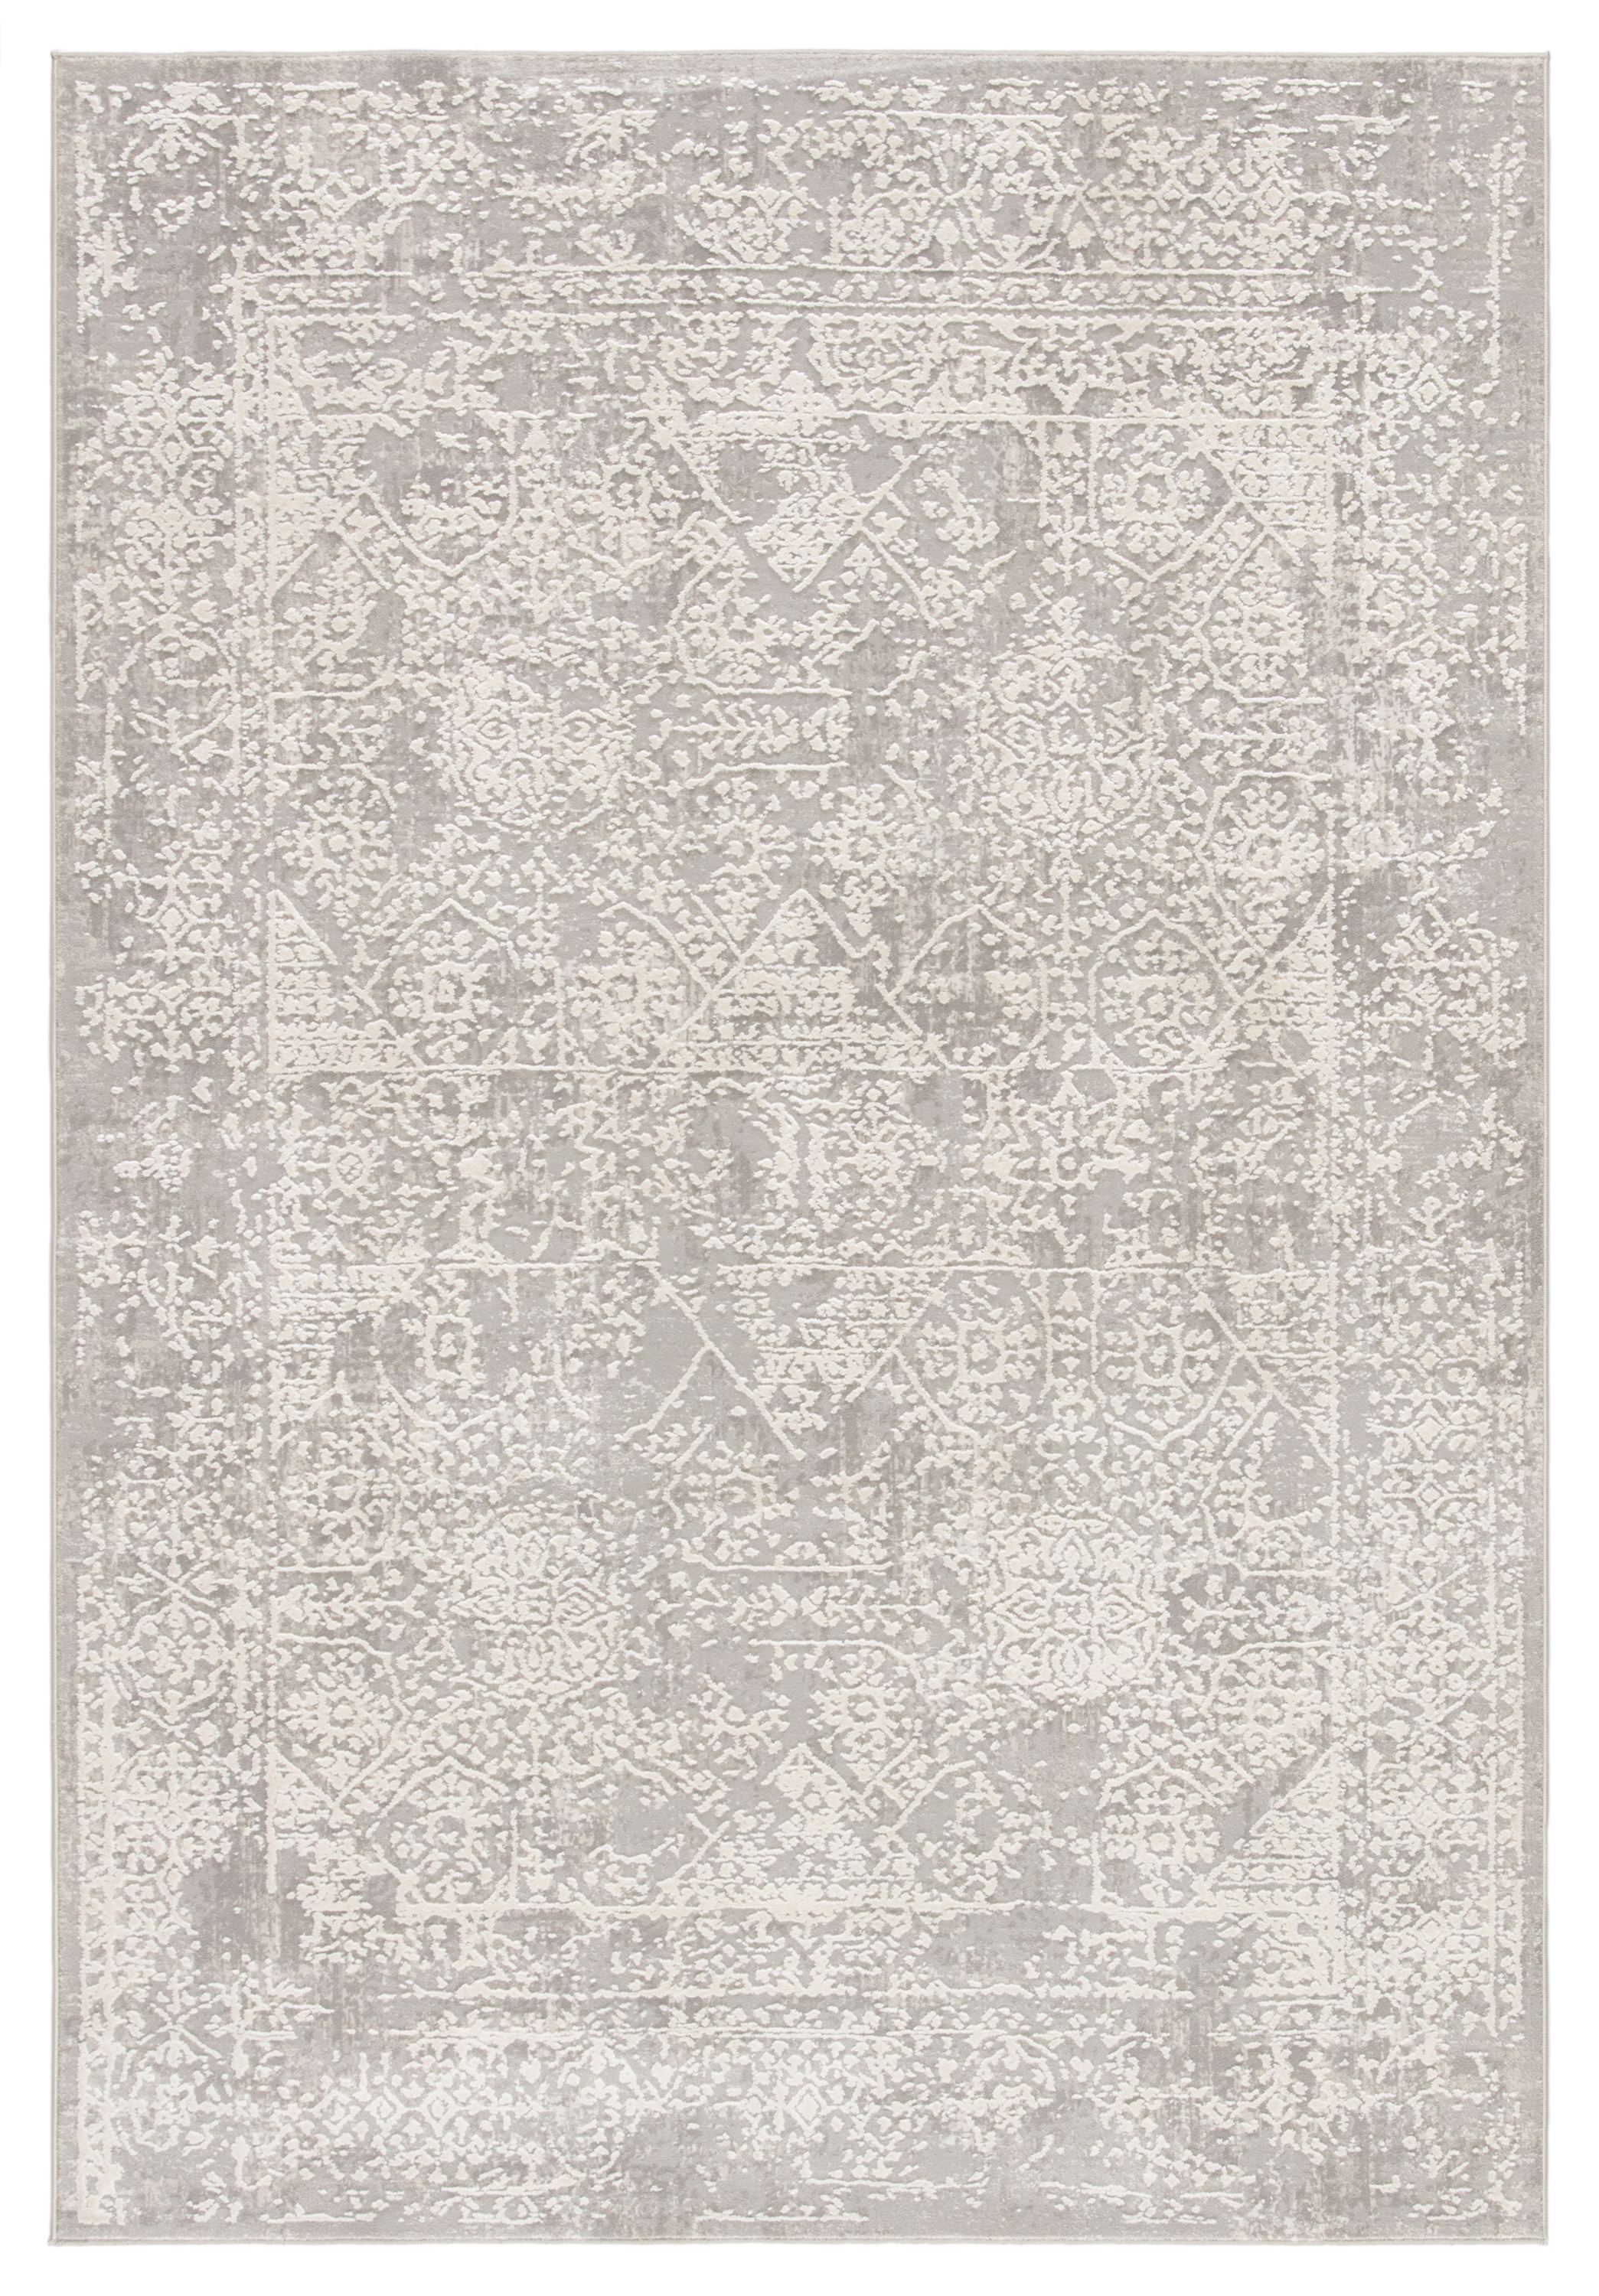 Lianna Abstract Gray/ White Area Rug (8' X 10') - Image 0